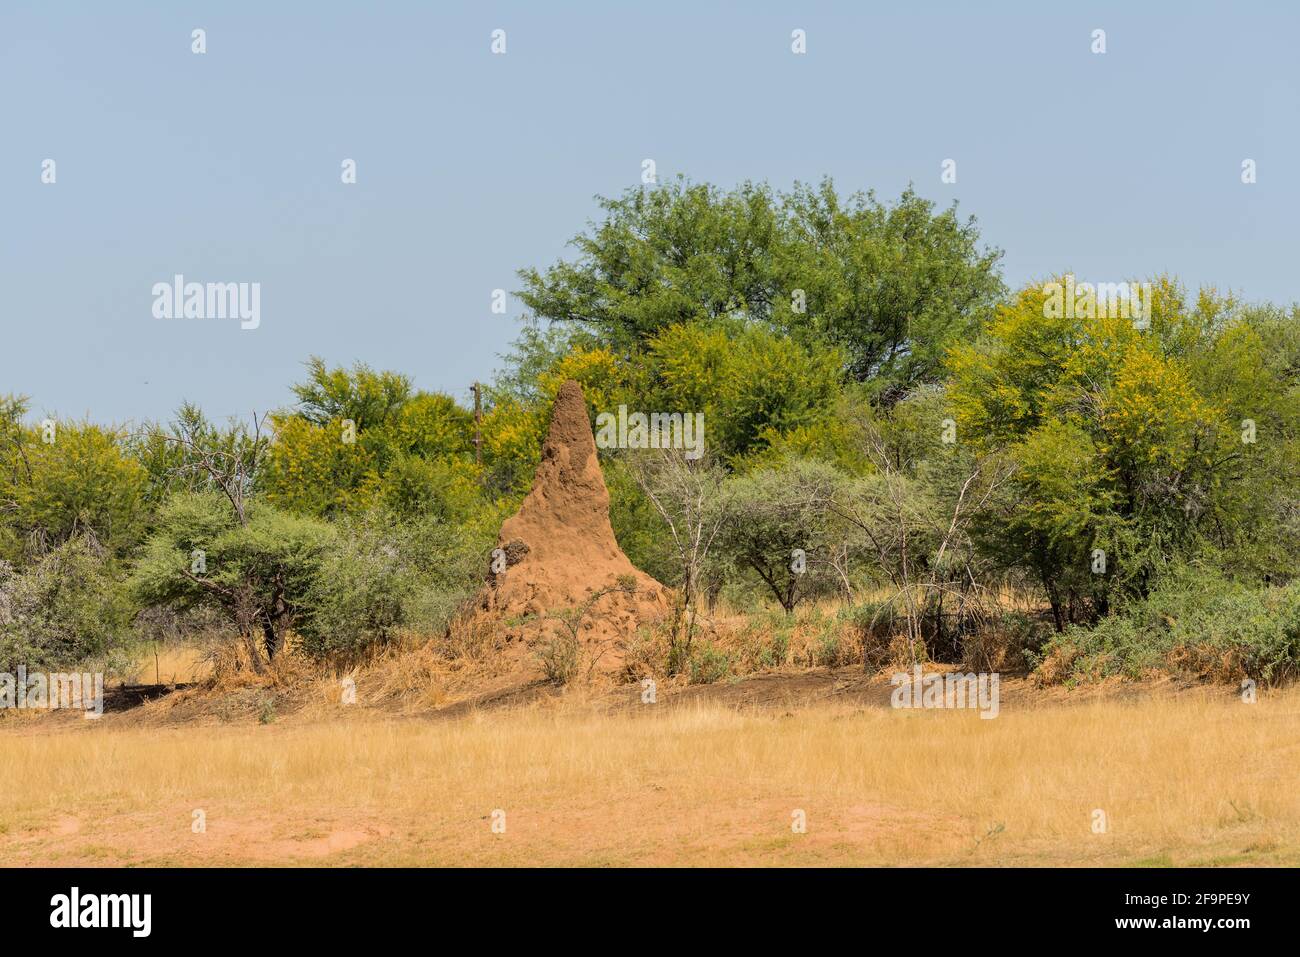 Bush landscape with a large termite mound, Namibia Stock Photo